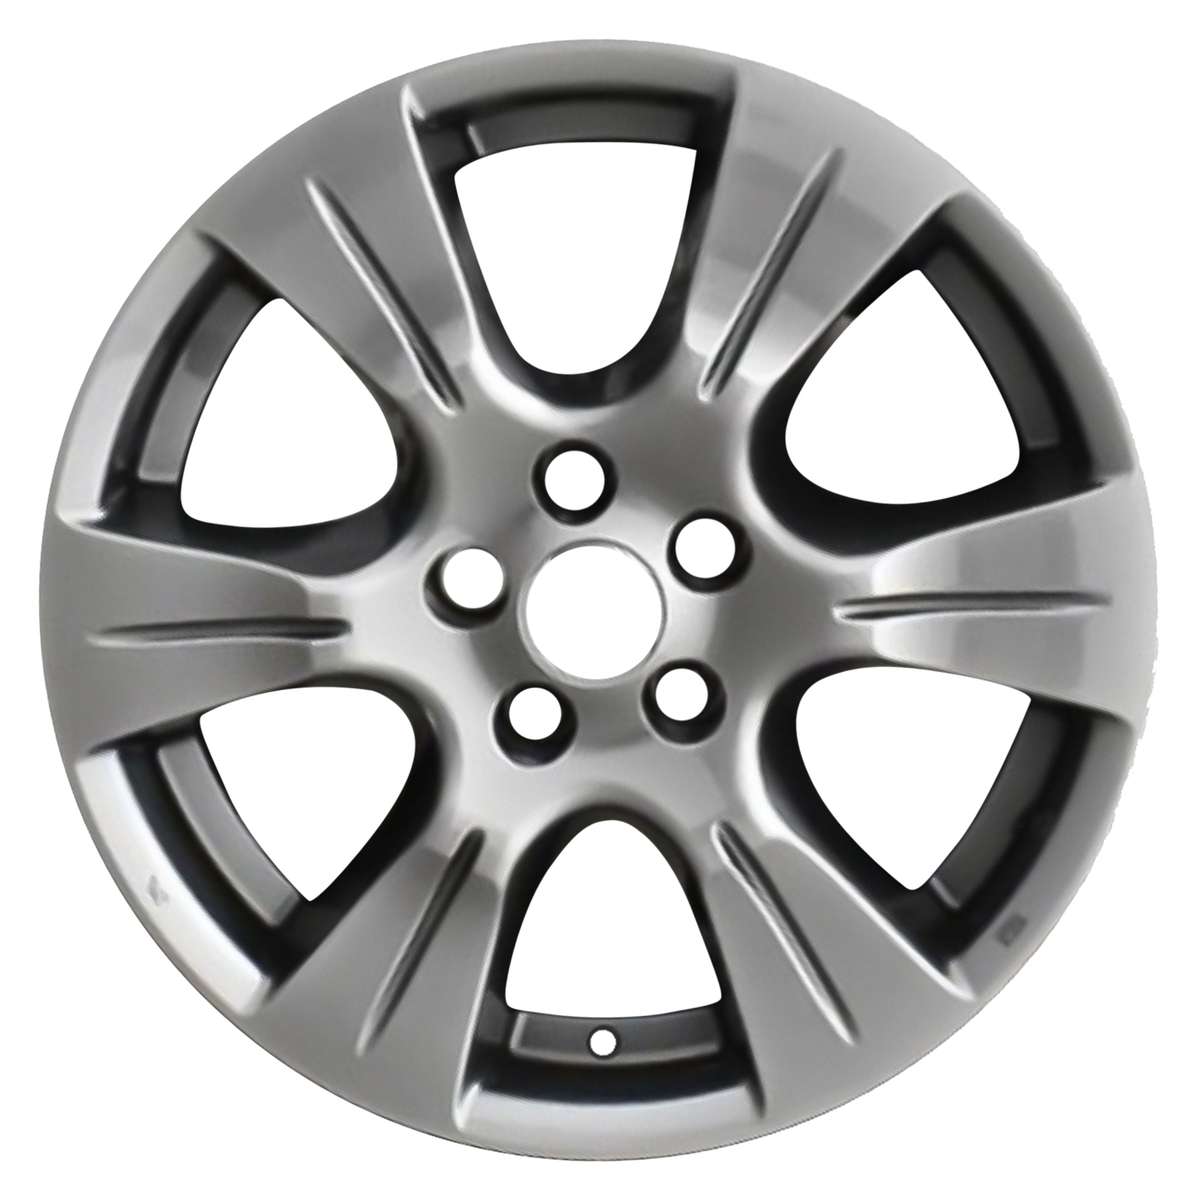 2019 Toyota Sienna 18" OEM Wheel Rim W75237H